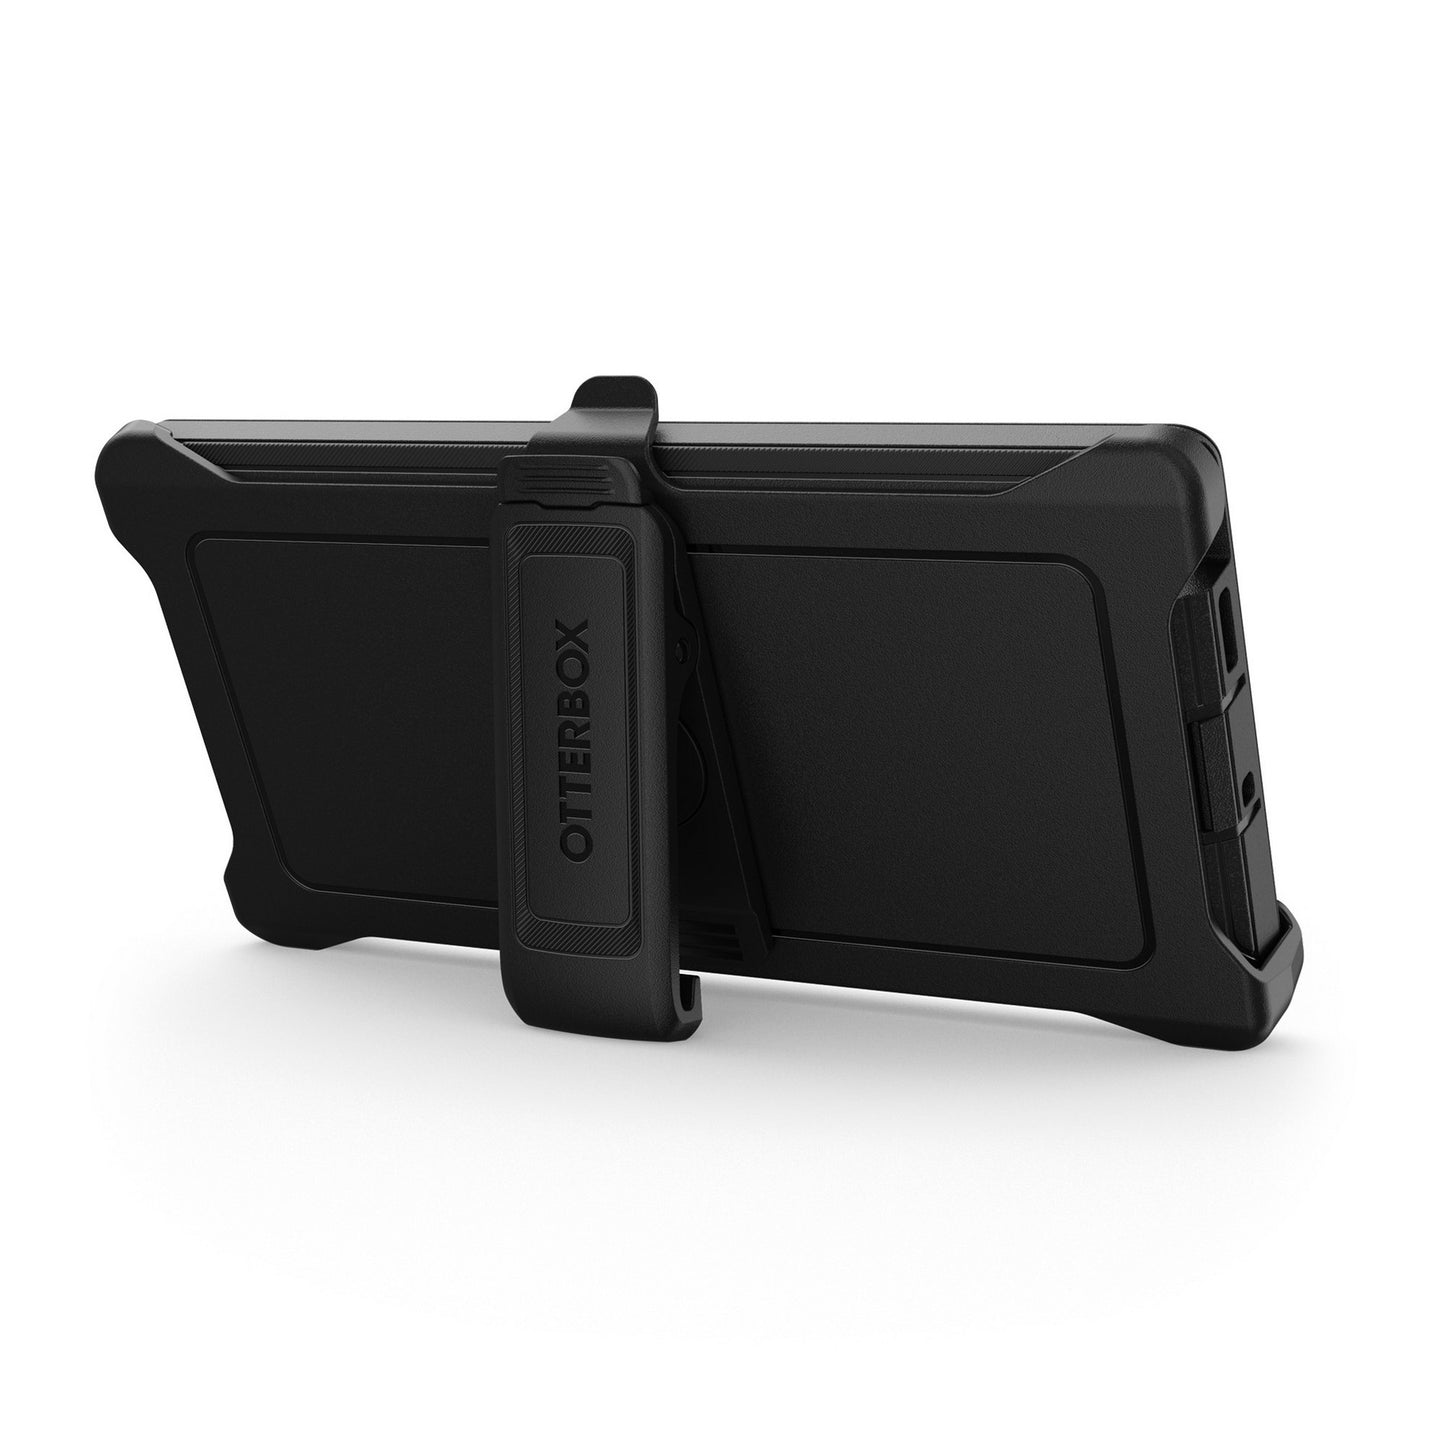 Samsung Galaxy S24 Ultra 5G Otterbox Defender Series Case - Black - 15-12252